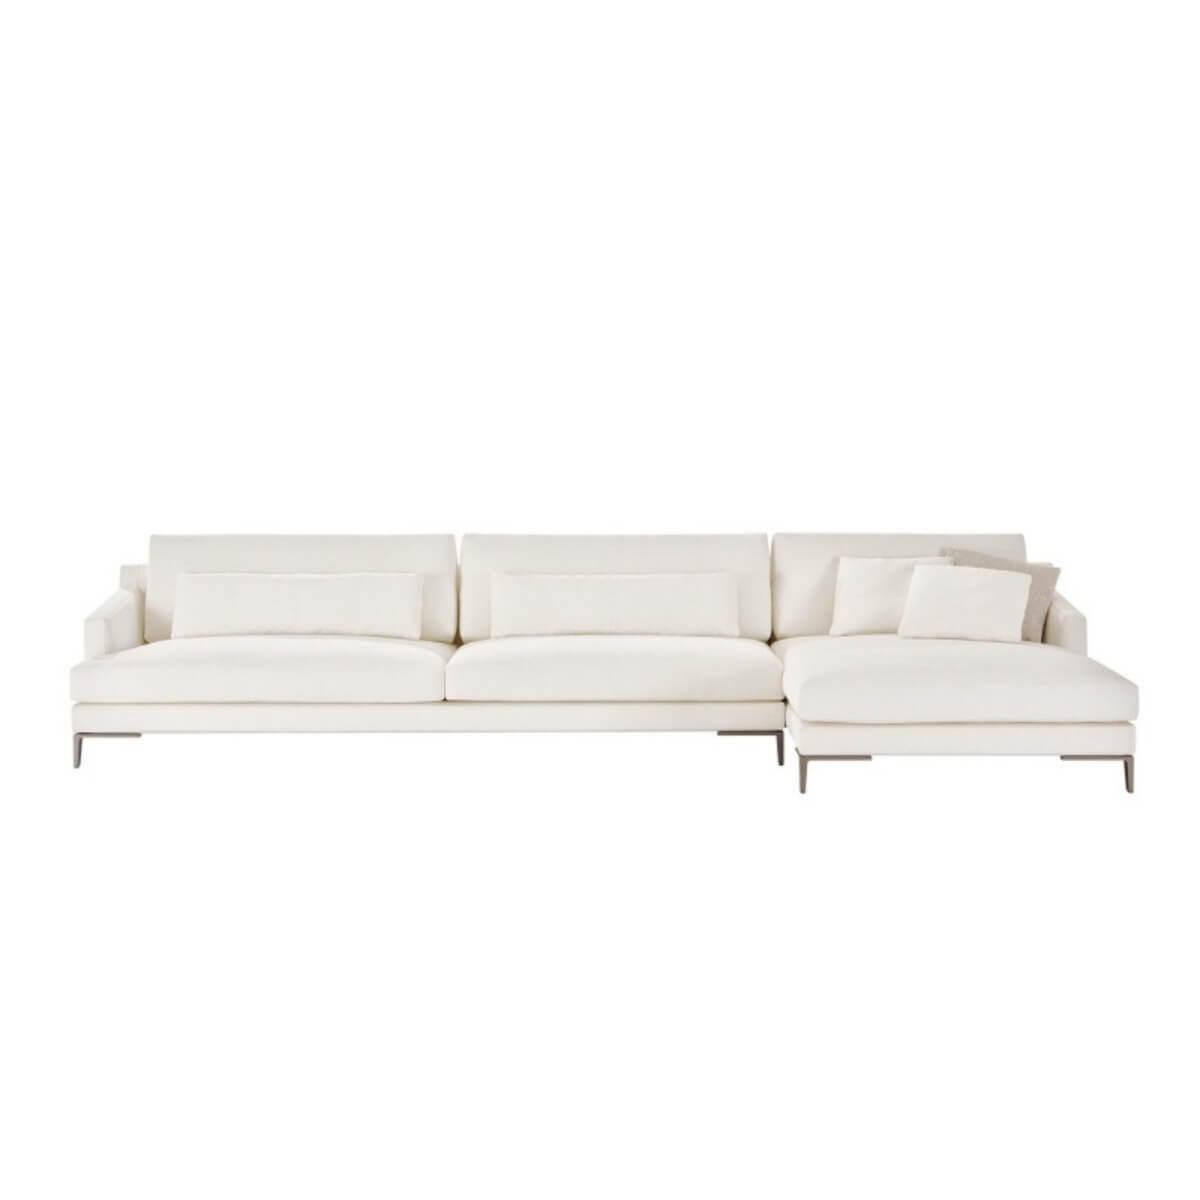 ElegantEnclave Cotton Linen Sofa: A Modern Oasis